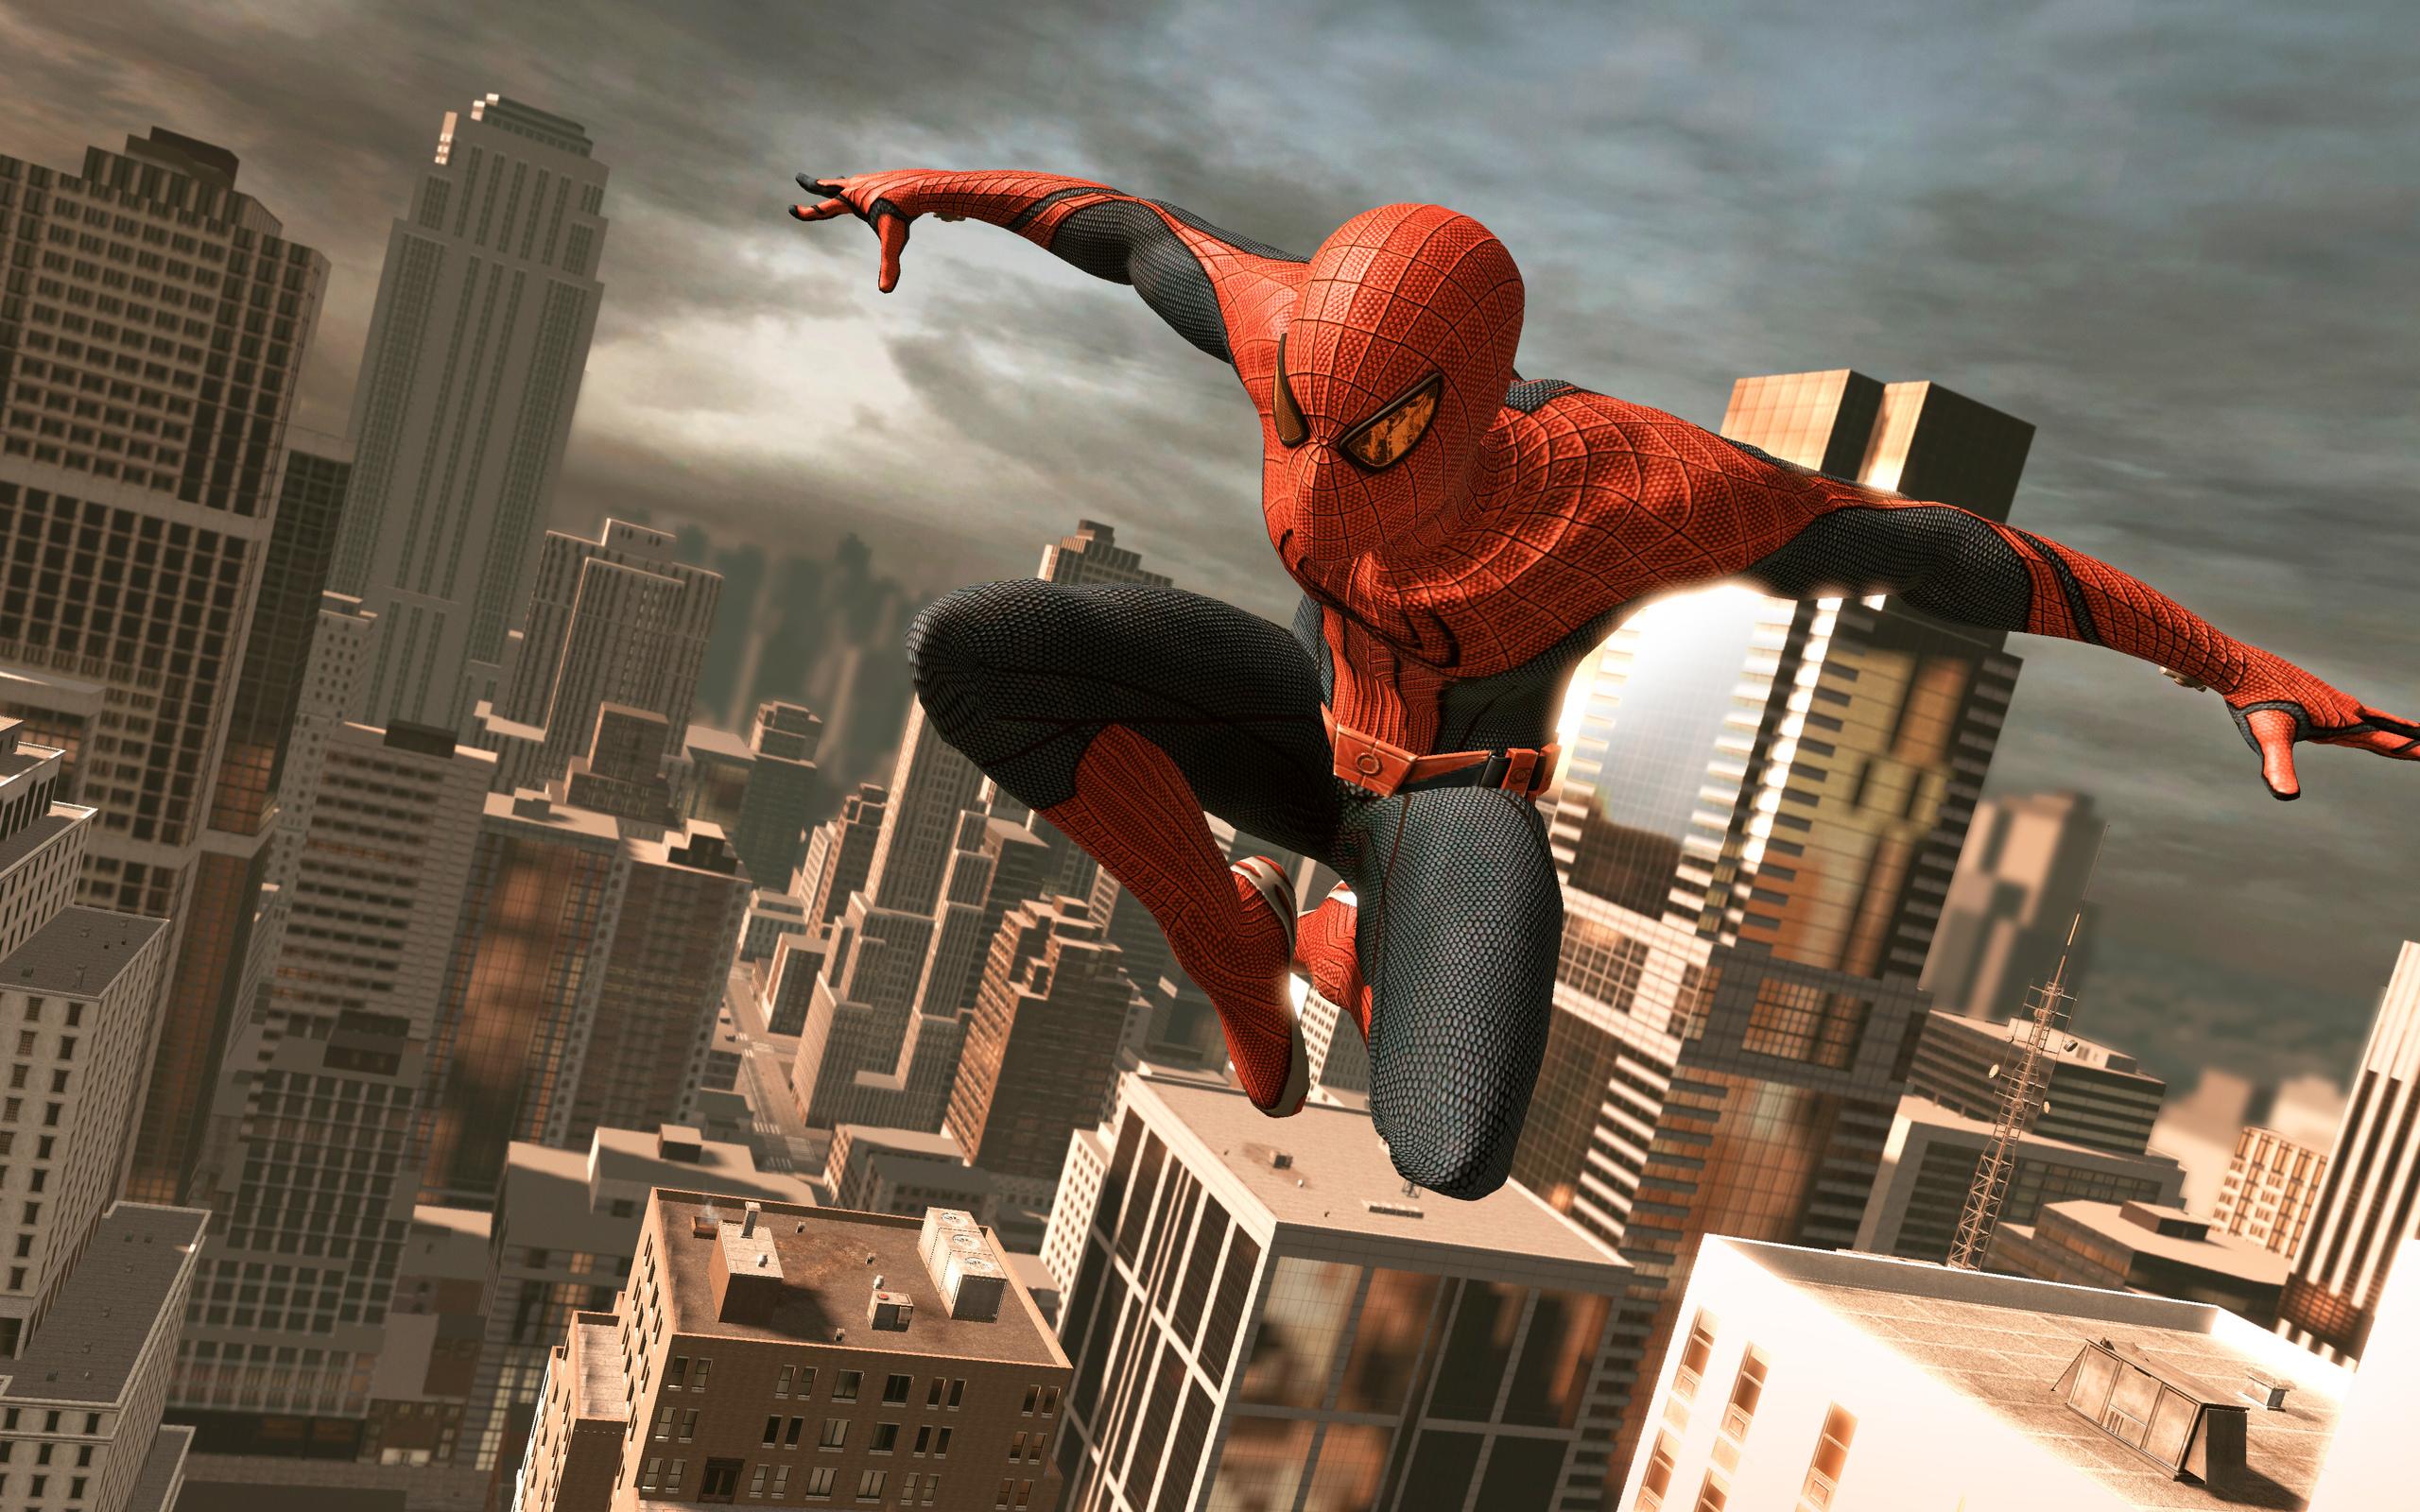 Spder-man Spider Man Spiderman Movies Comics jumping through the building Wallpaper